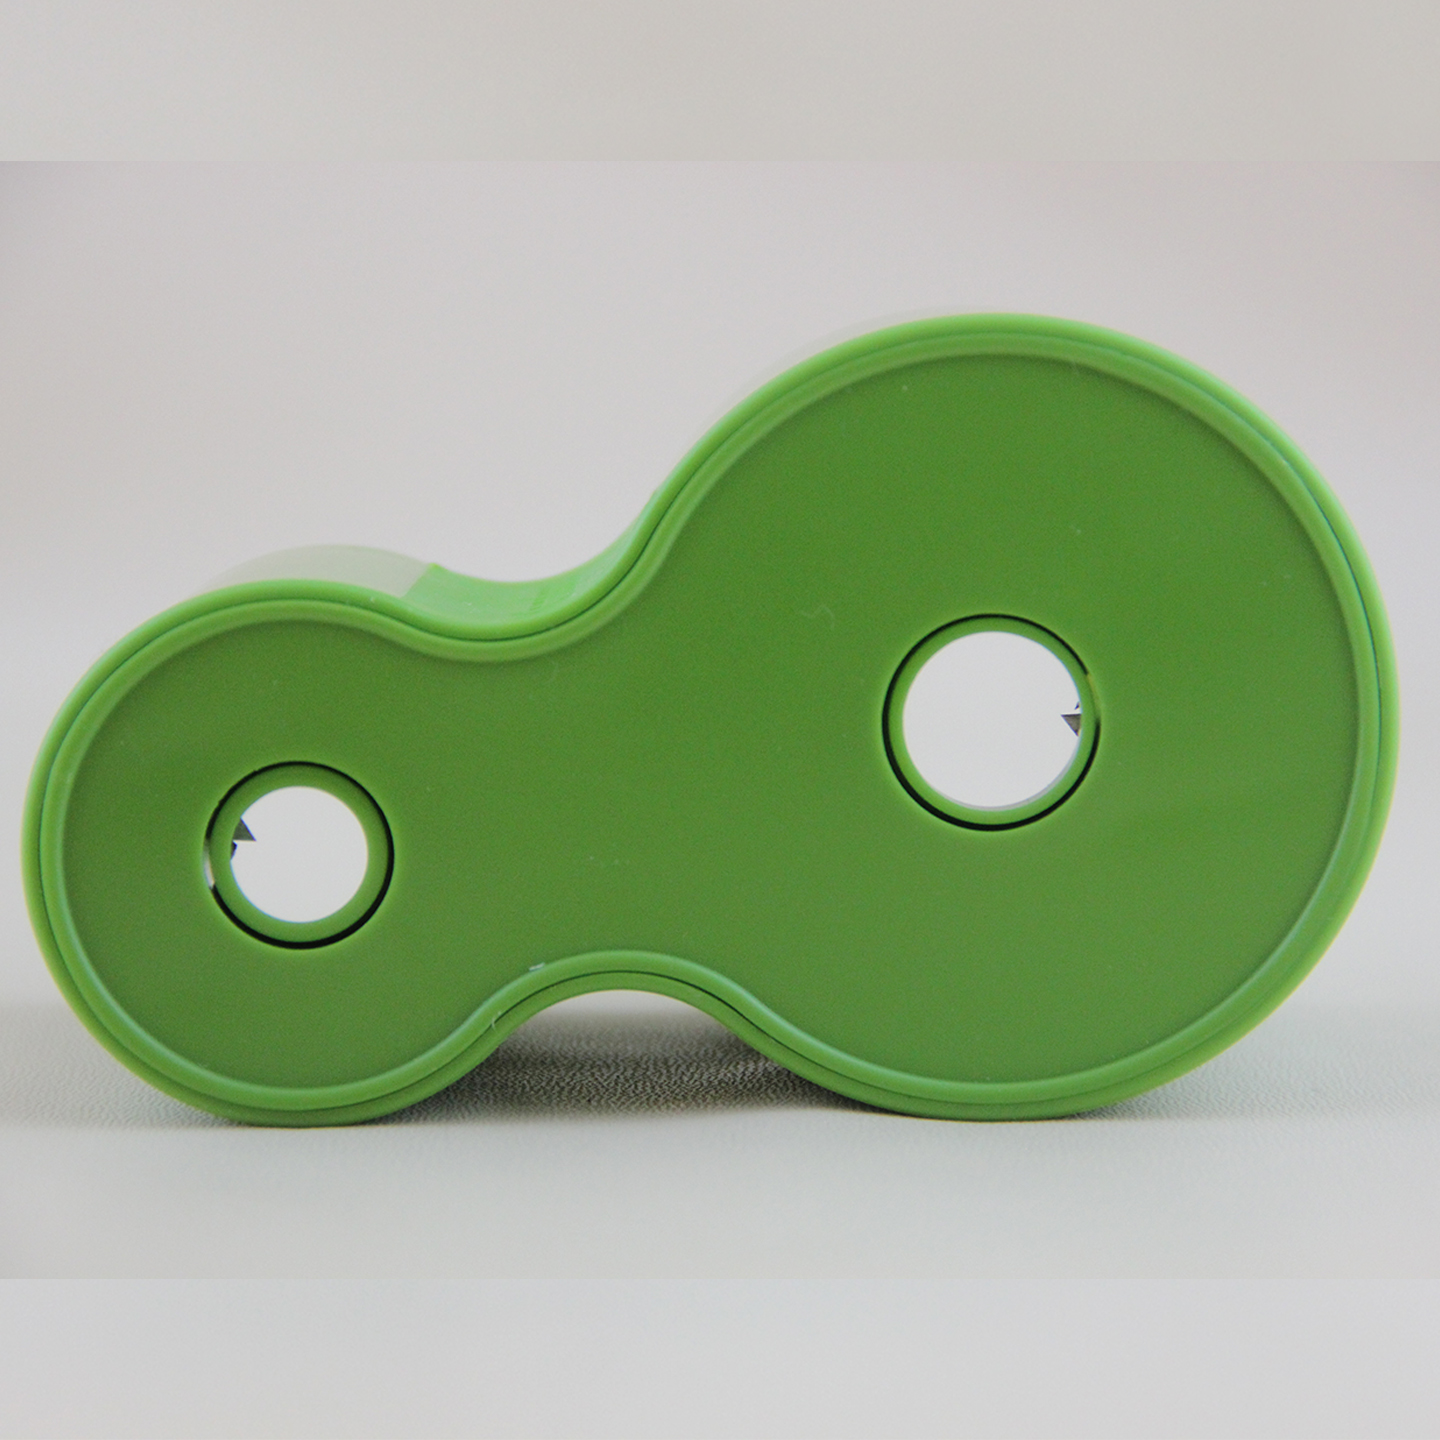 Microplane Green Spiral Cutter